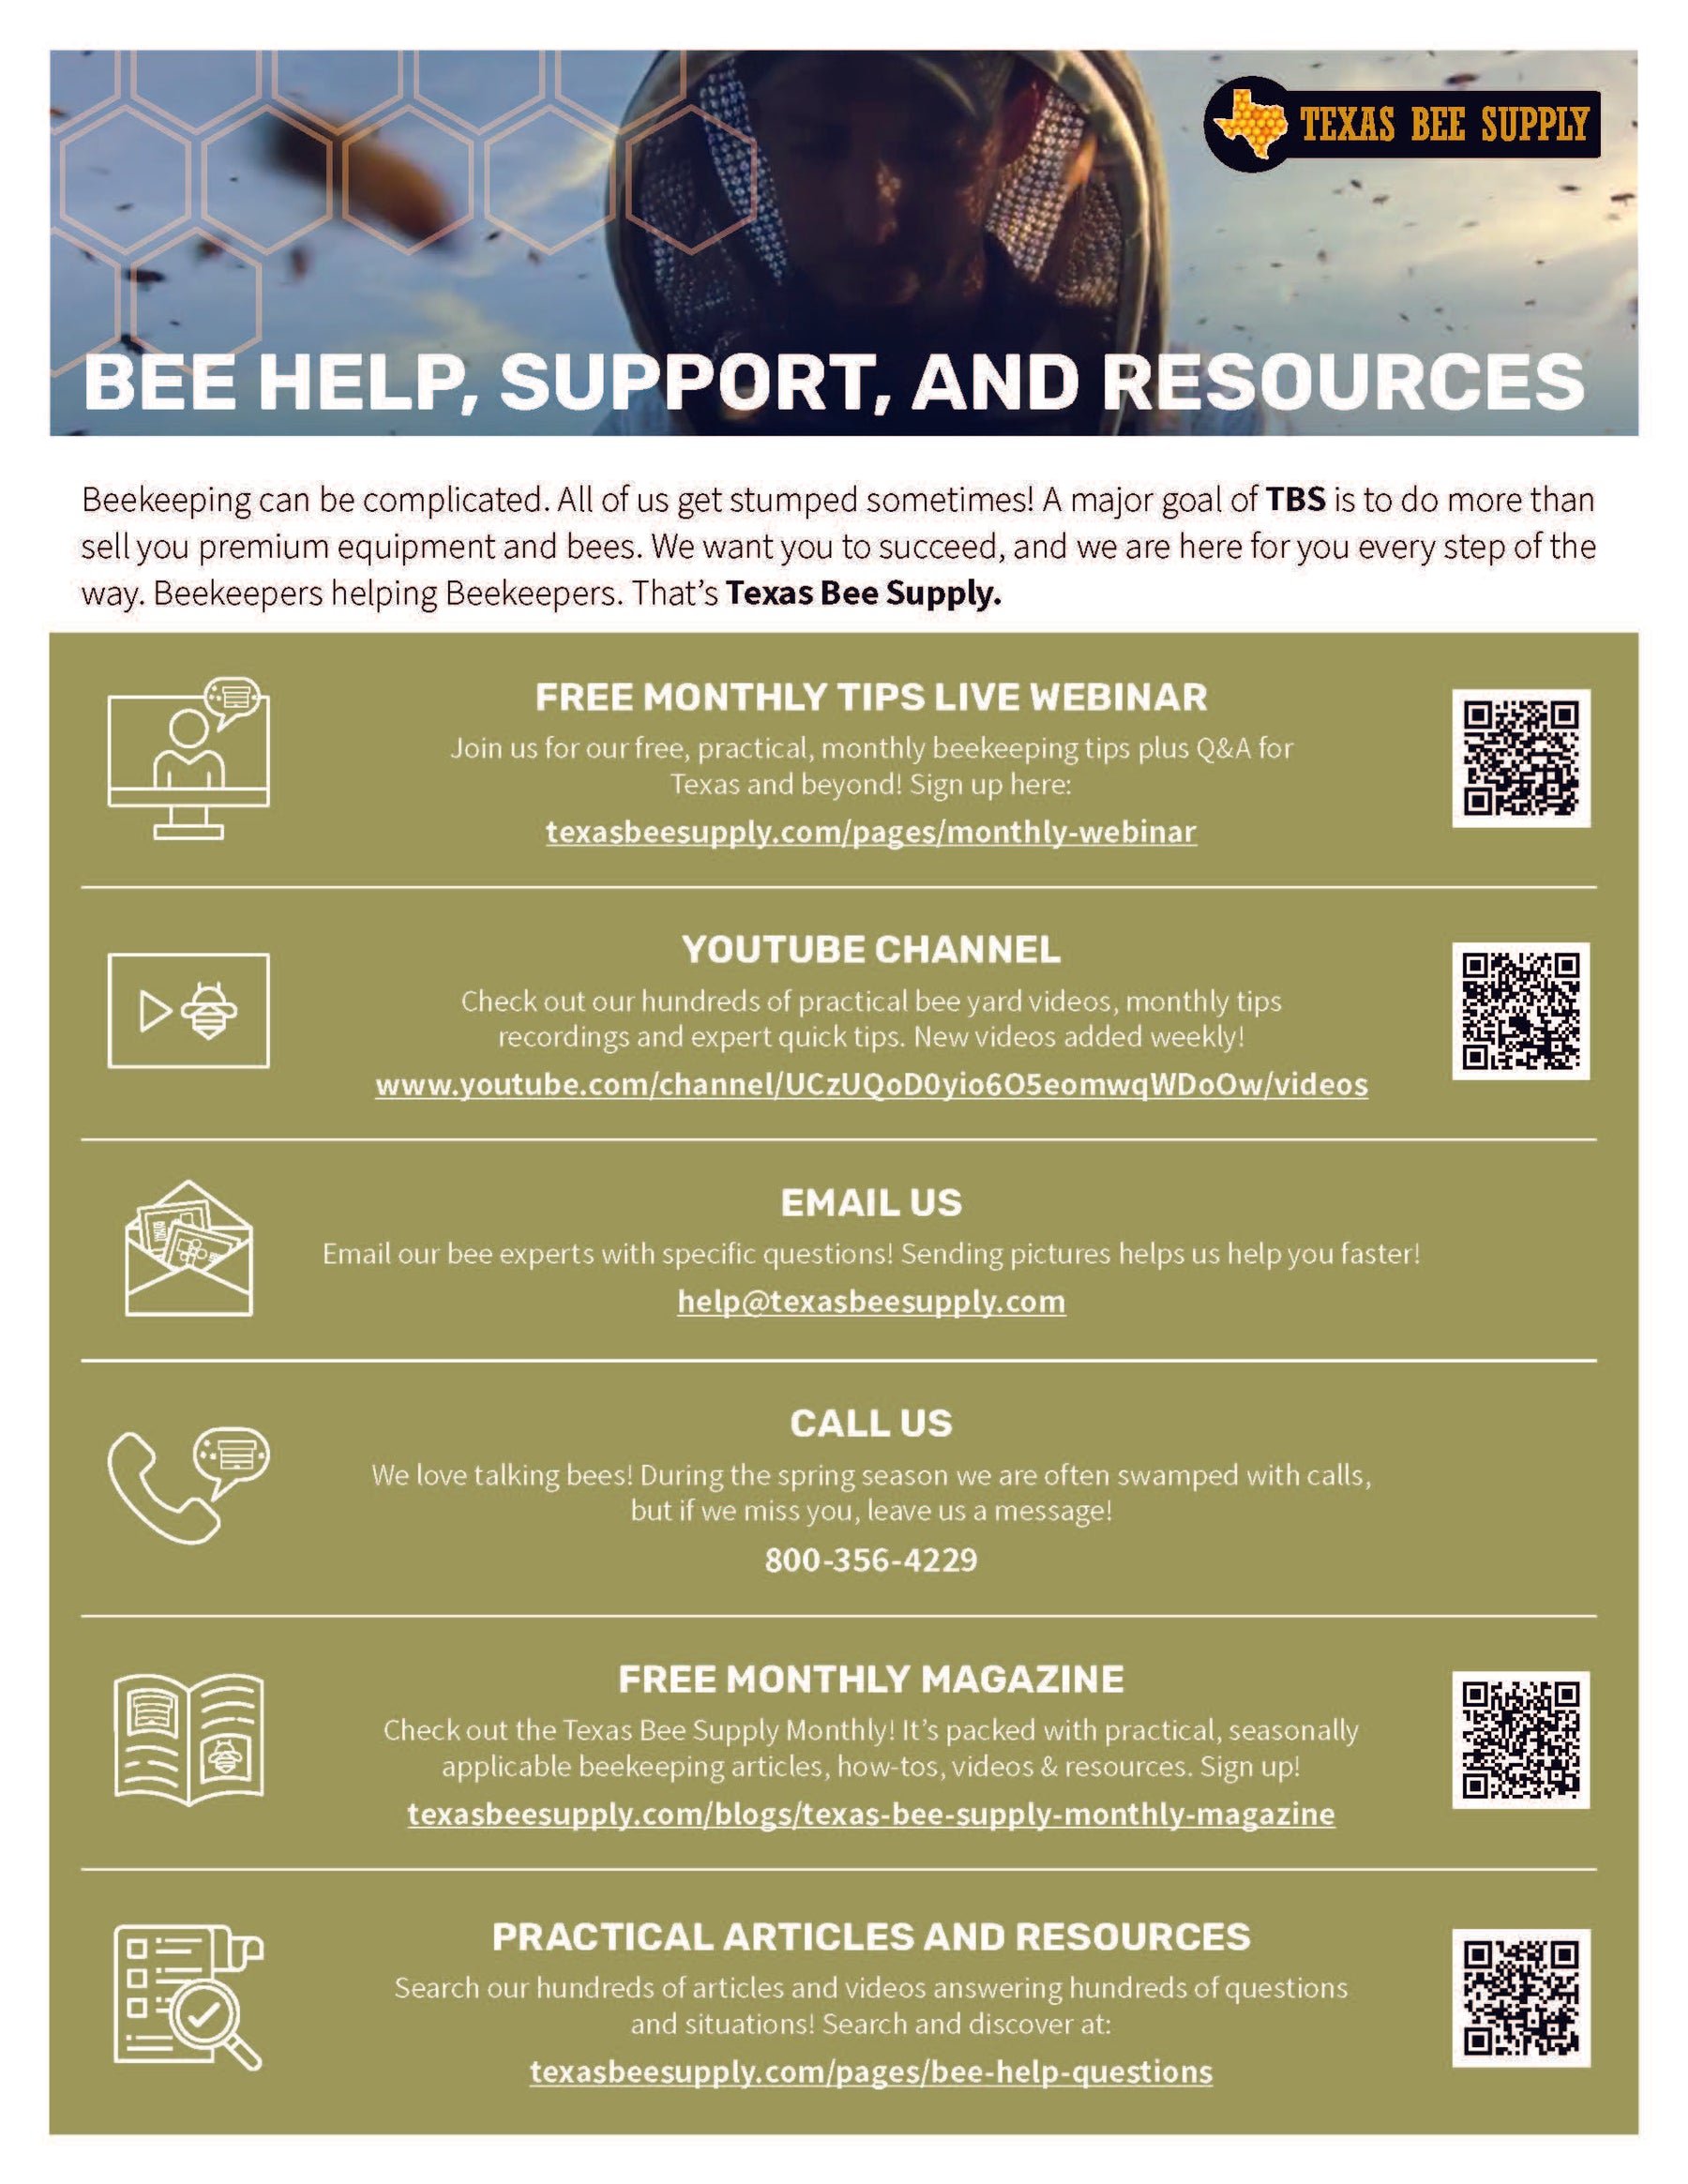 Texas Bee Supply Bee Help & Resources